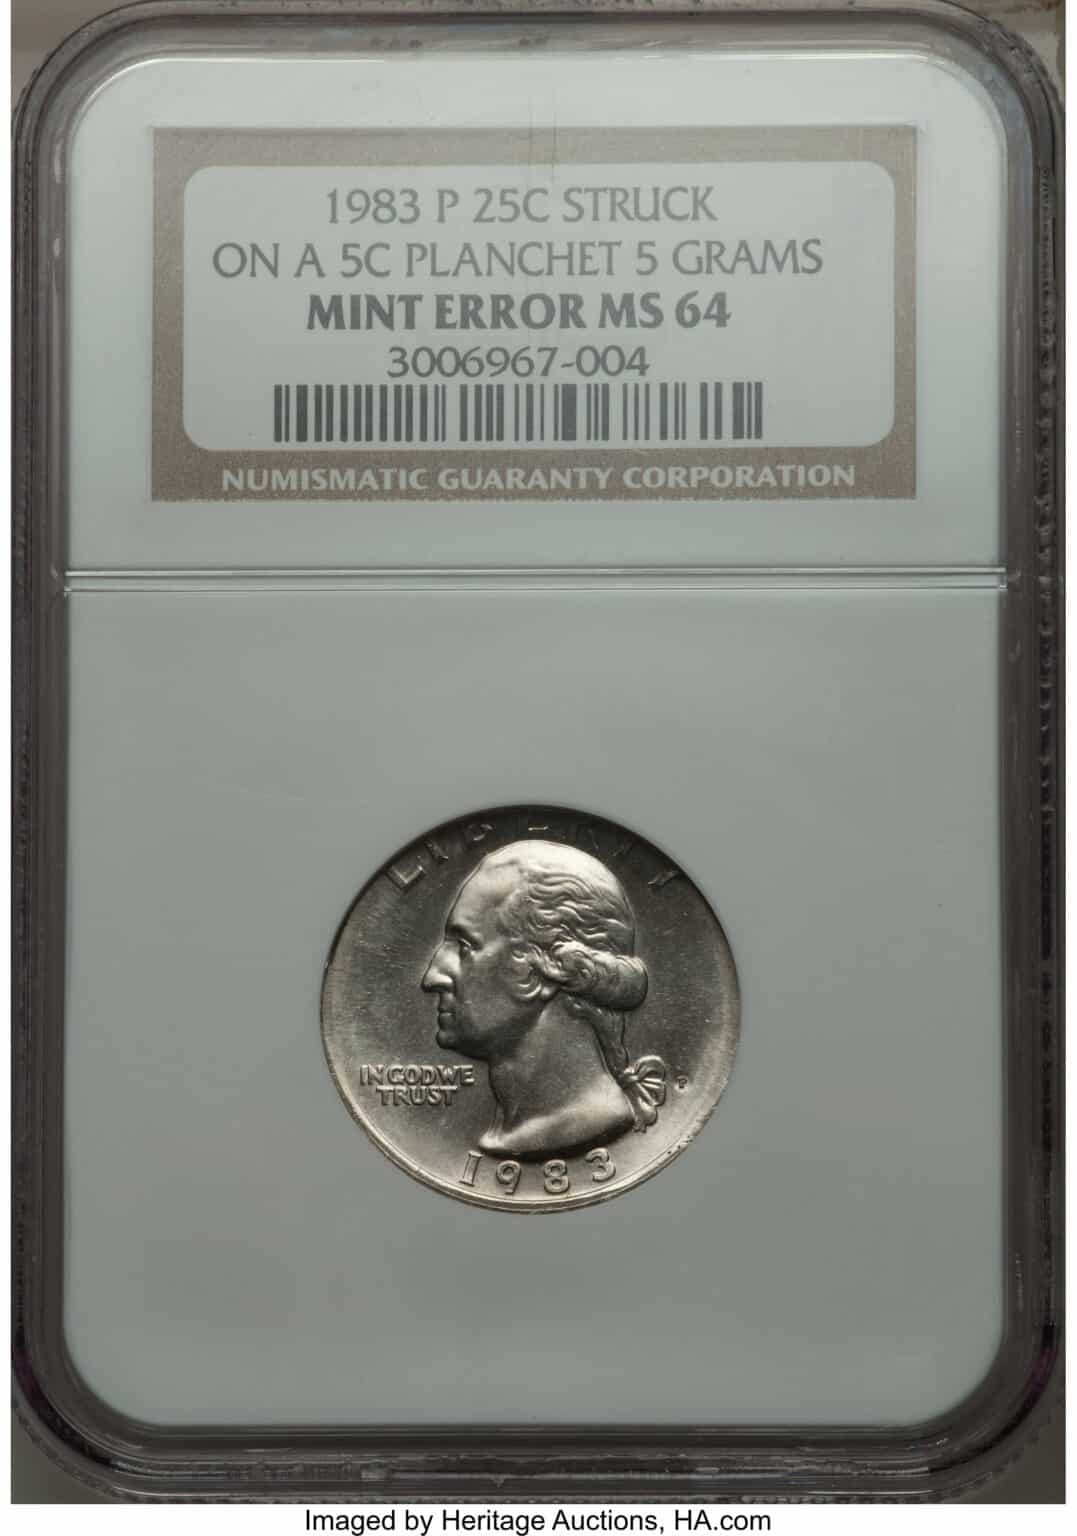 1983 Quarter Struck on a Nickel